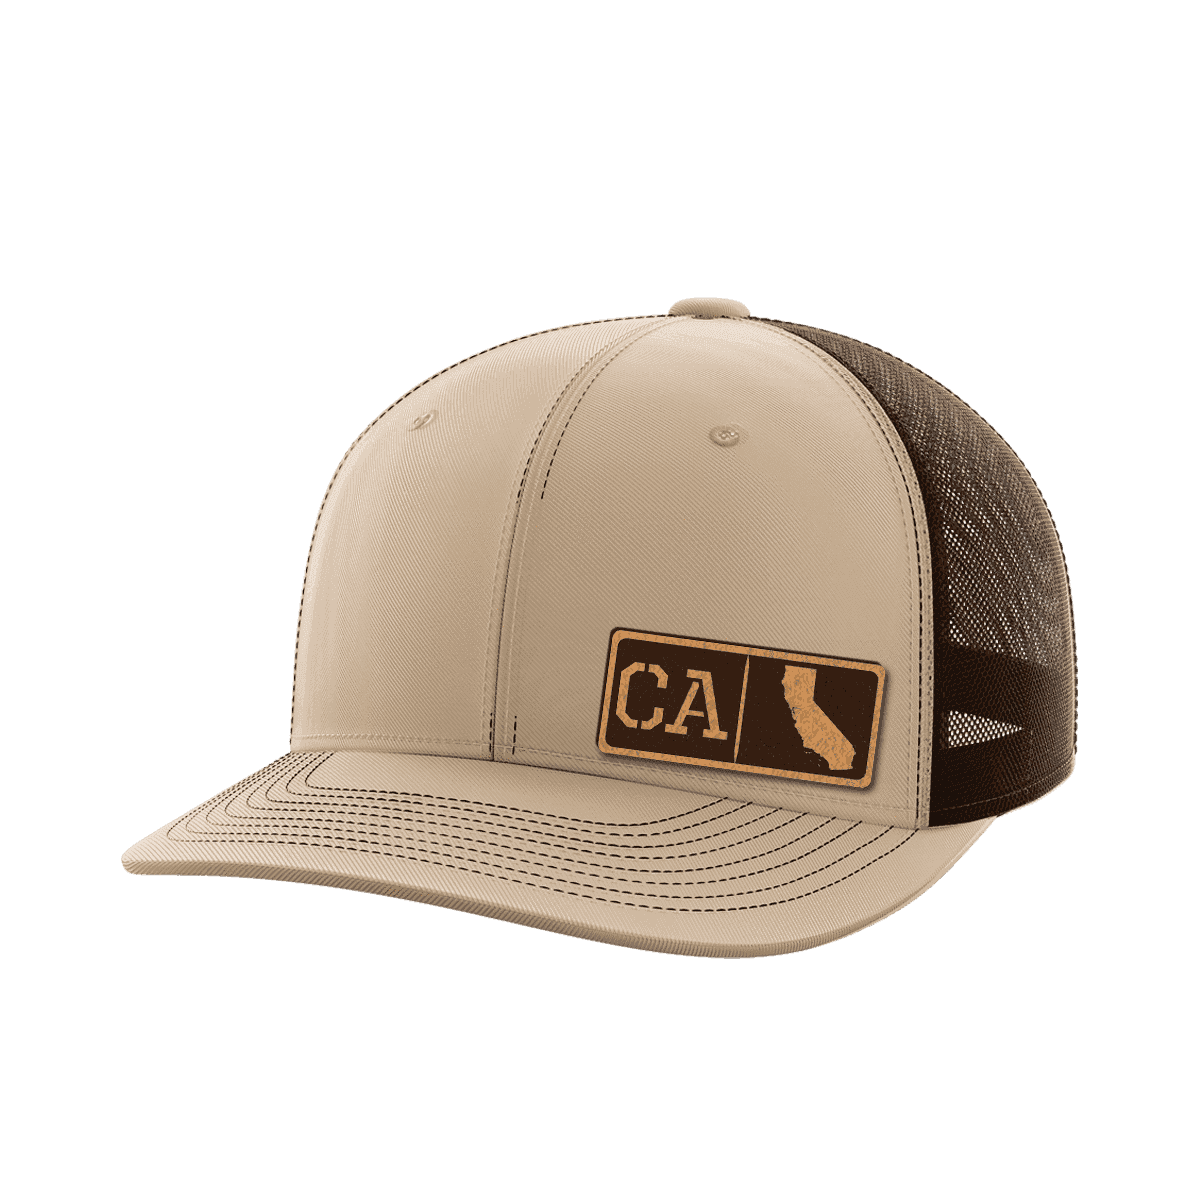 California Homegrown Hats - Greater Half